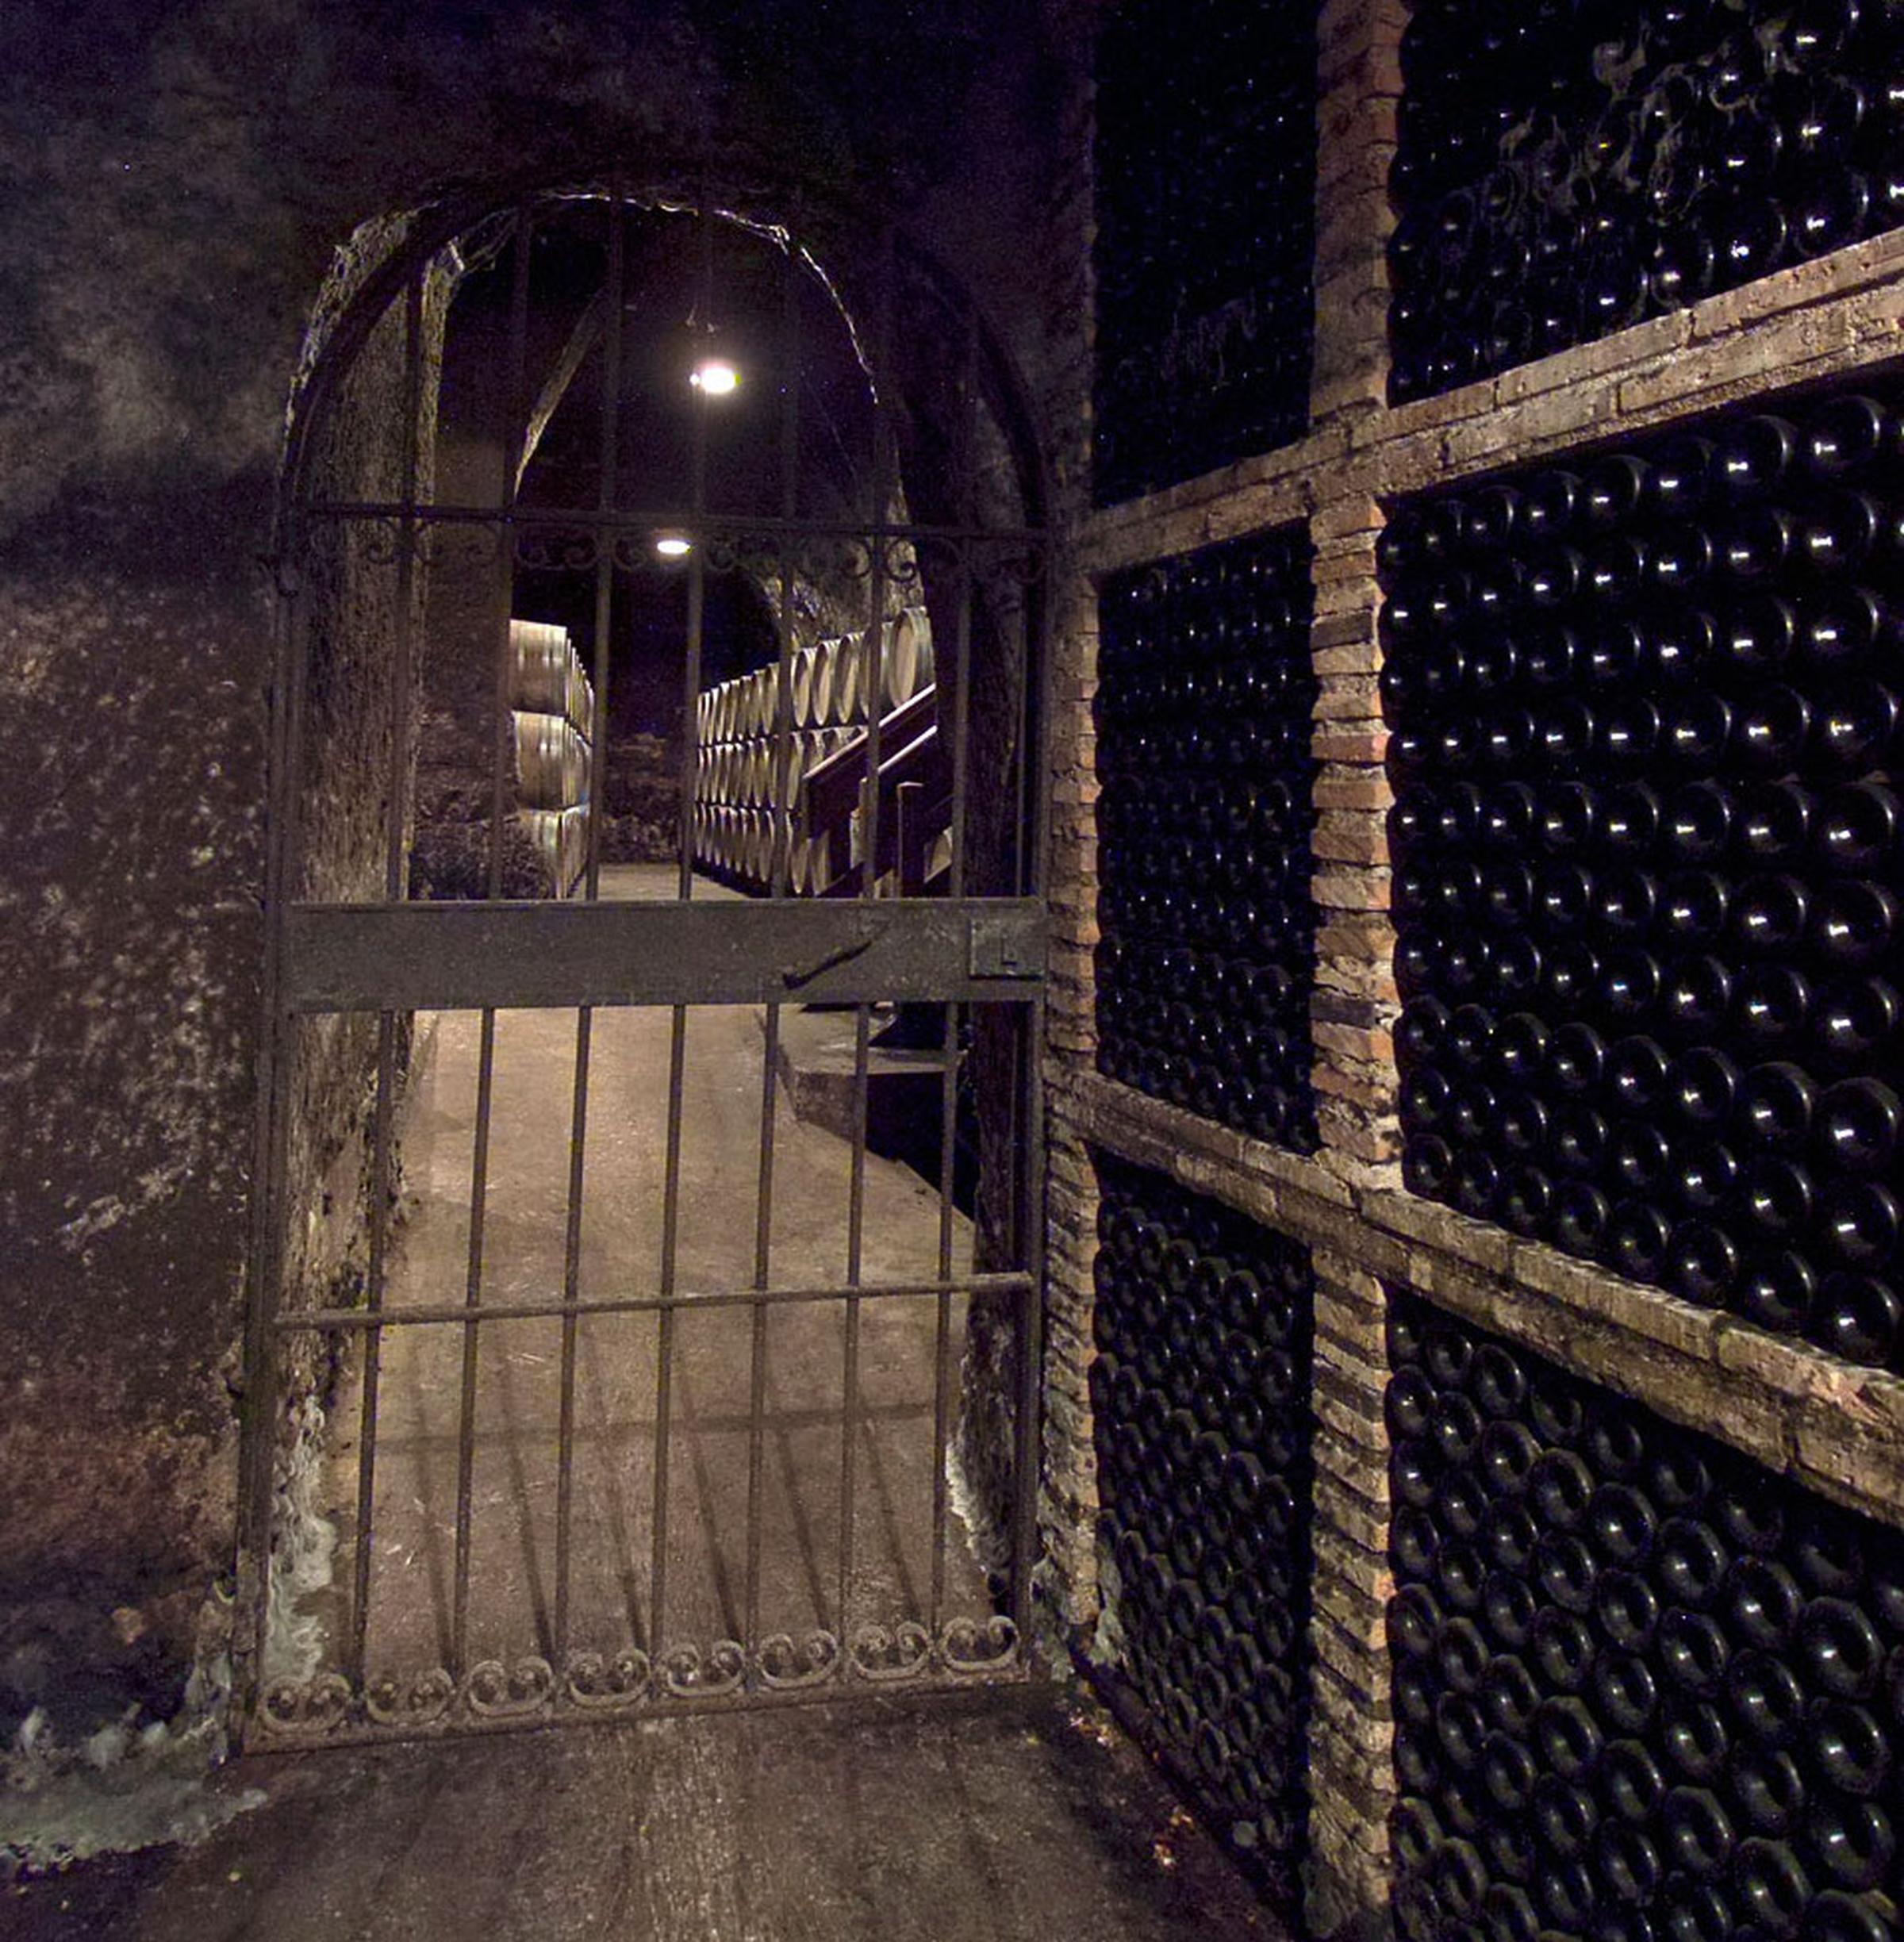 https://a.storyblok.com/f/105614/958x977/4f436a7730/olabarri-wine-cellar.jpg